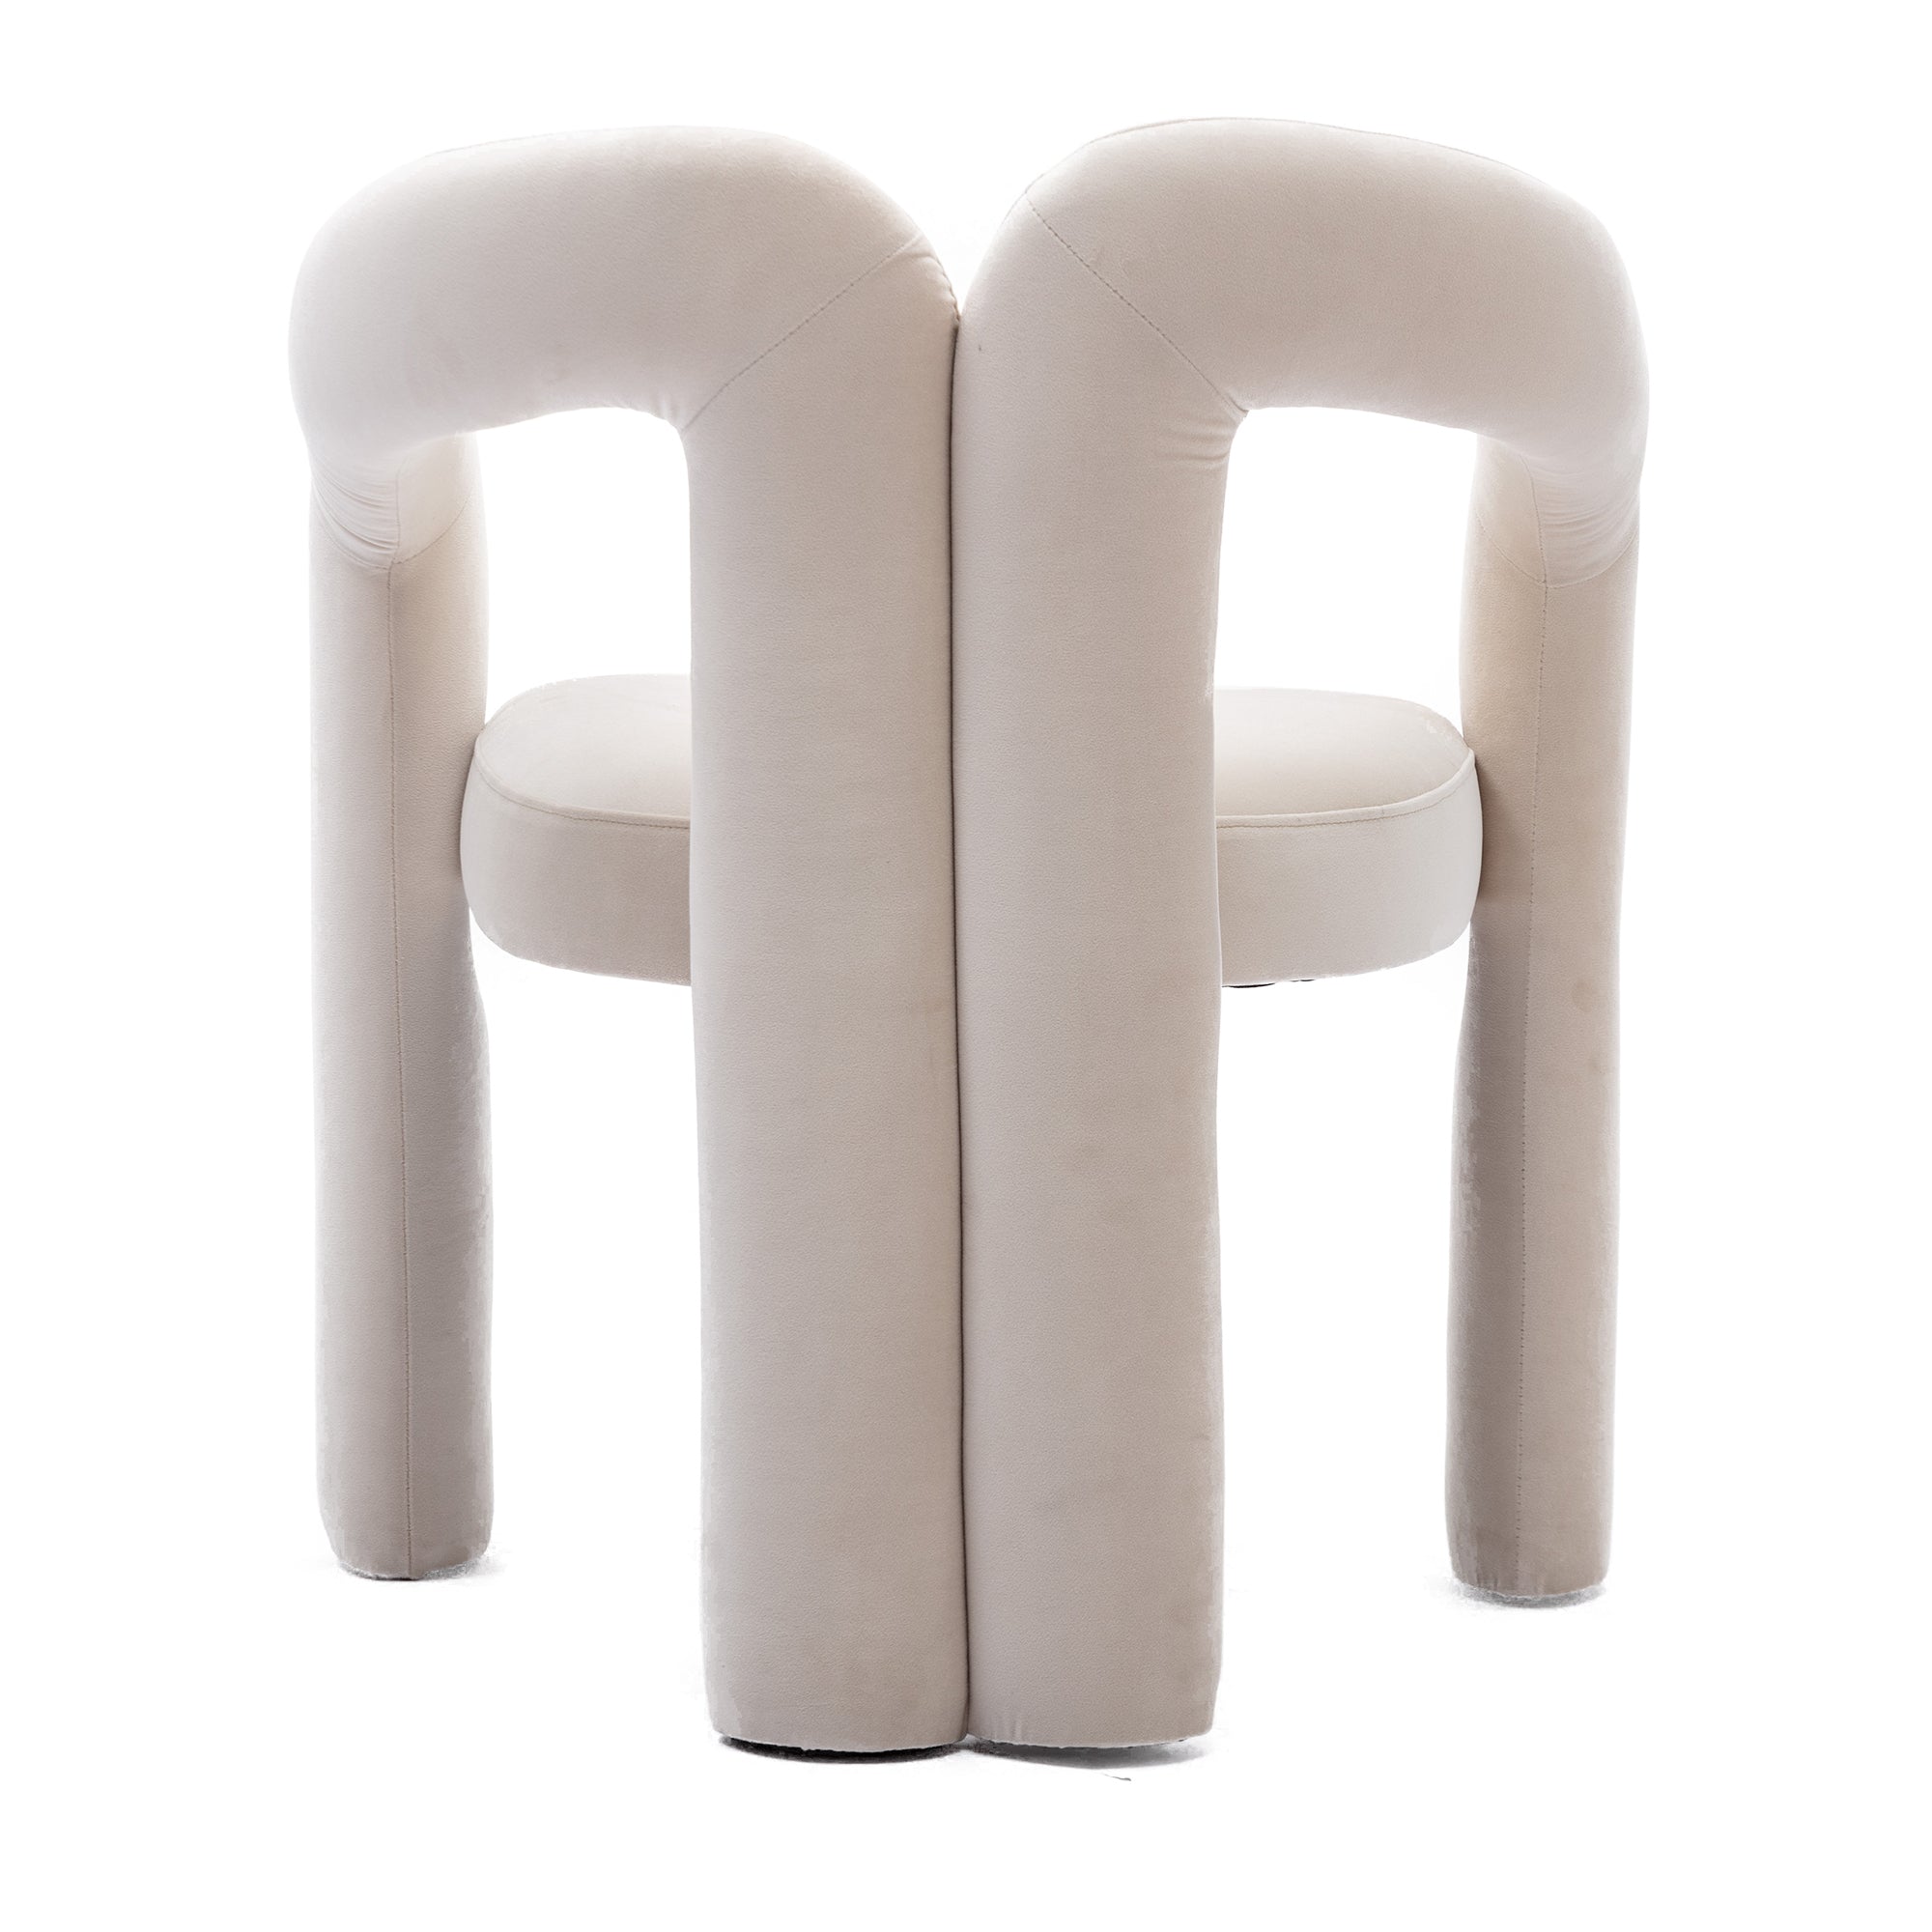 COOLMORE Contemporary Designed Fabric Upholstered beige-velvet